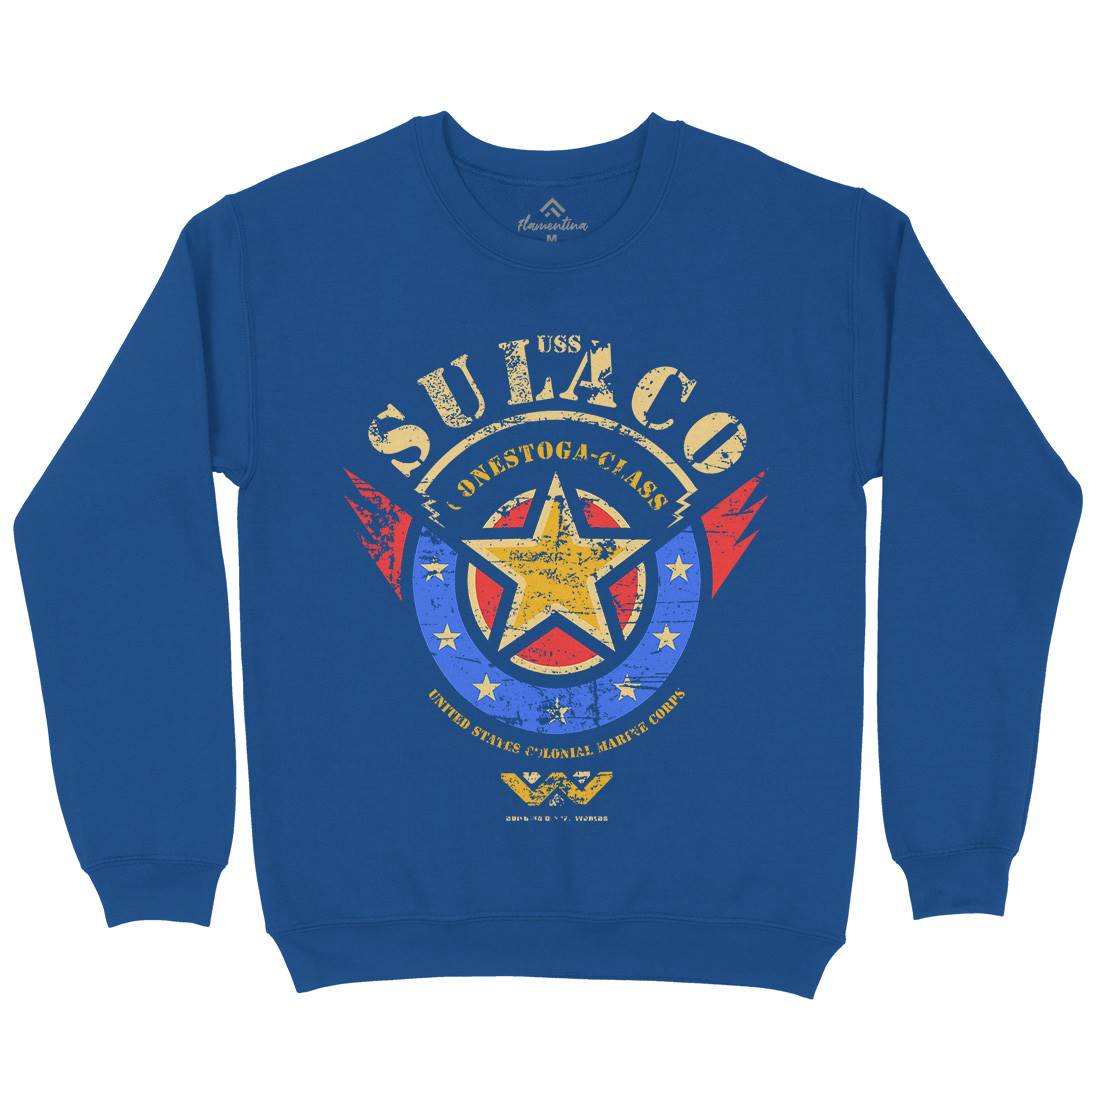 Uss Sulaco Kids Crew Neck Sweatshirt Space D275